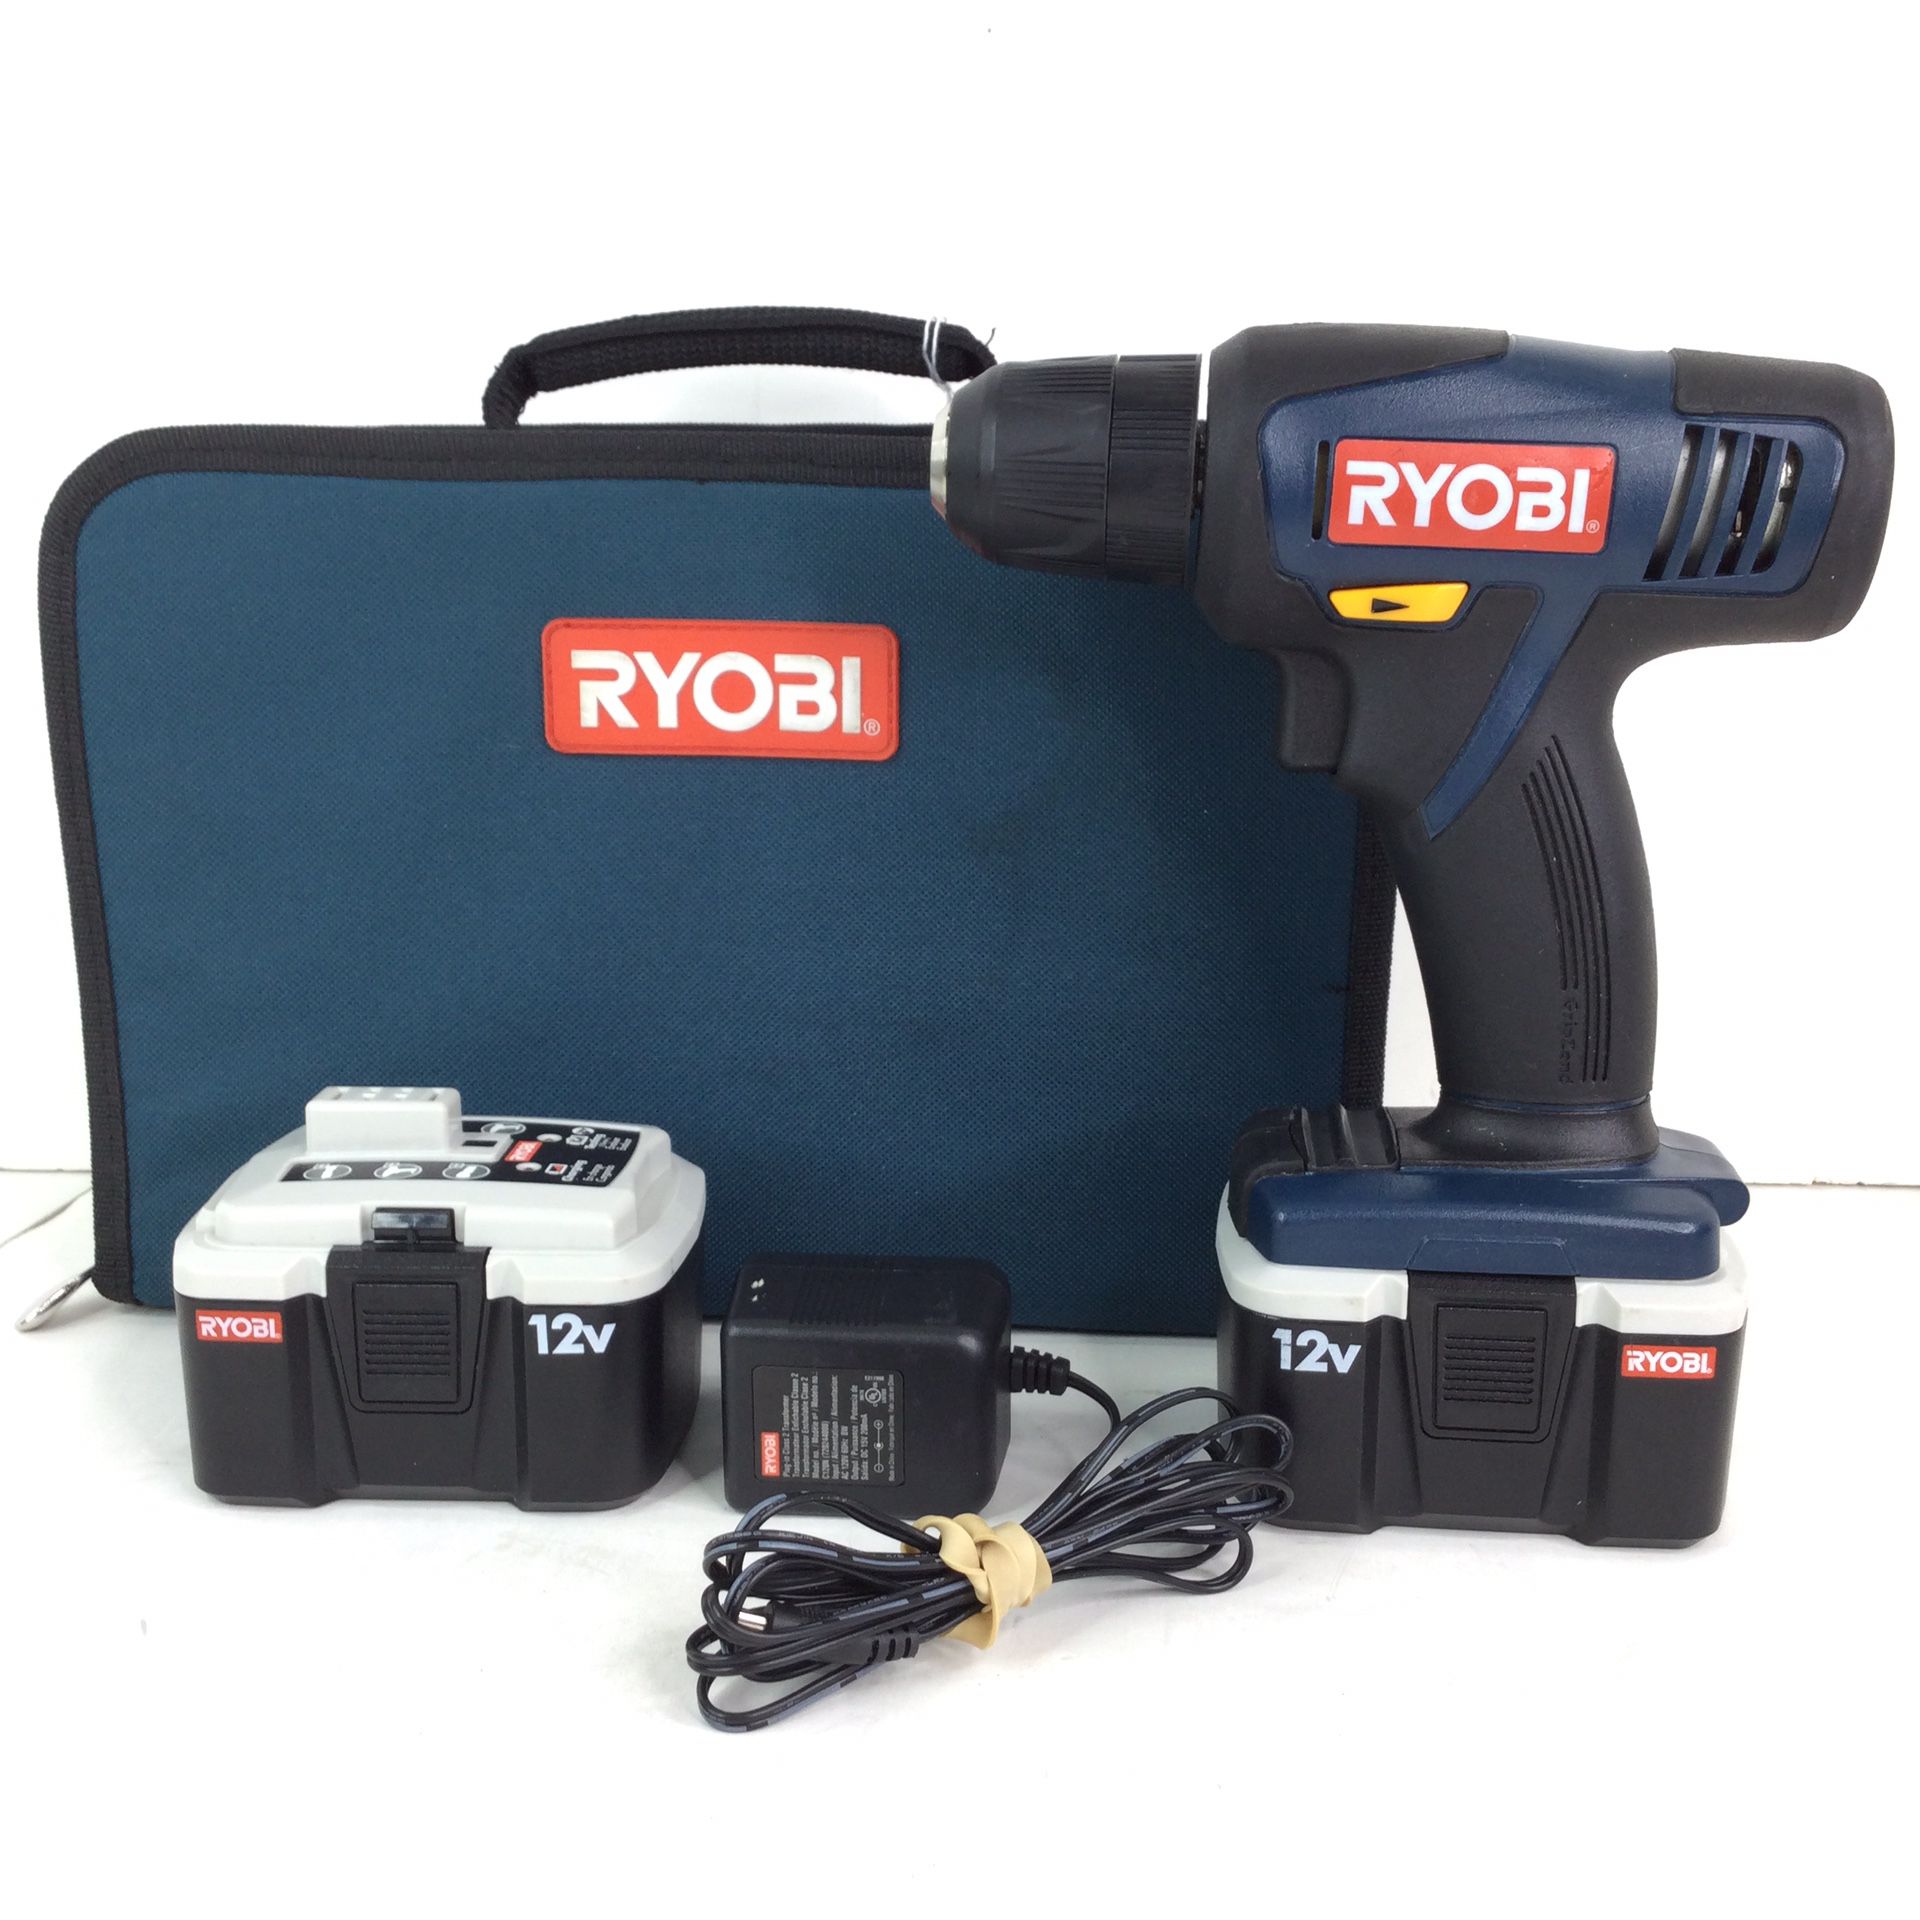 Ryobi 12V Compact Drill / Driver Kit with 2 Batteries 